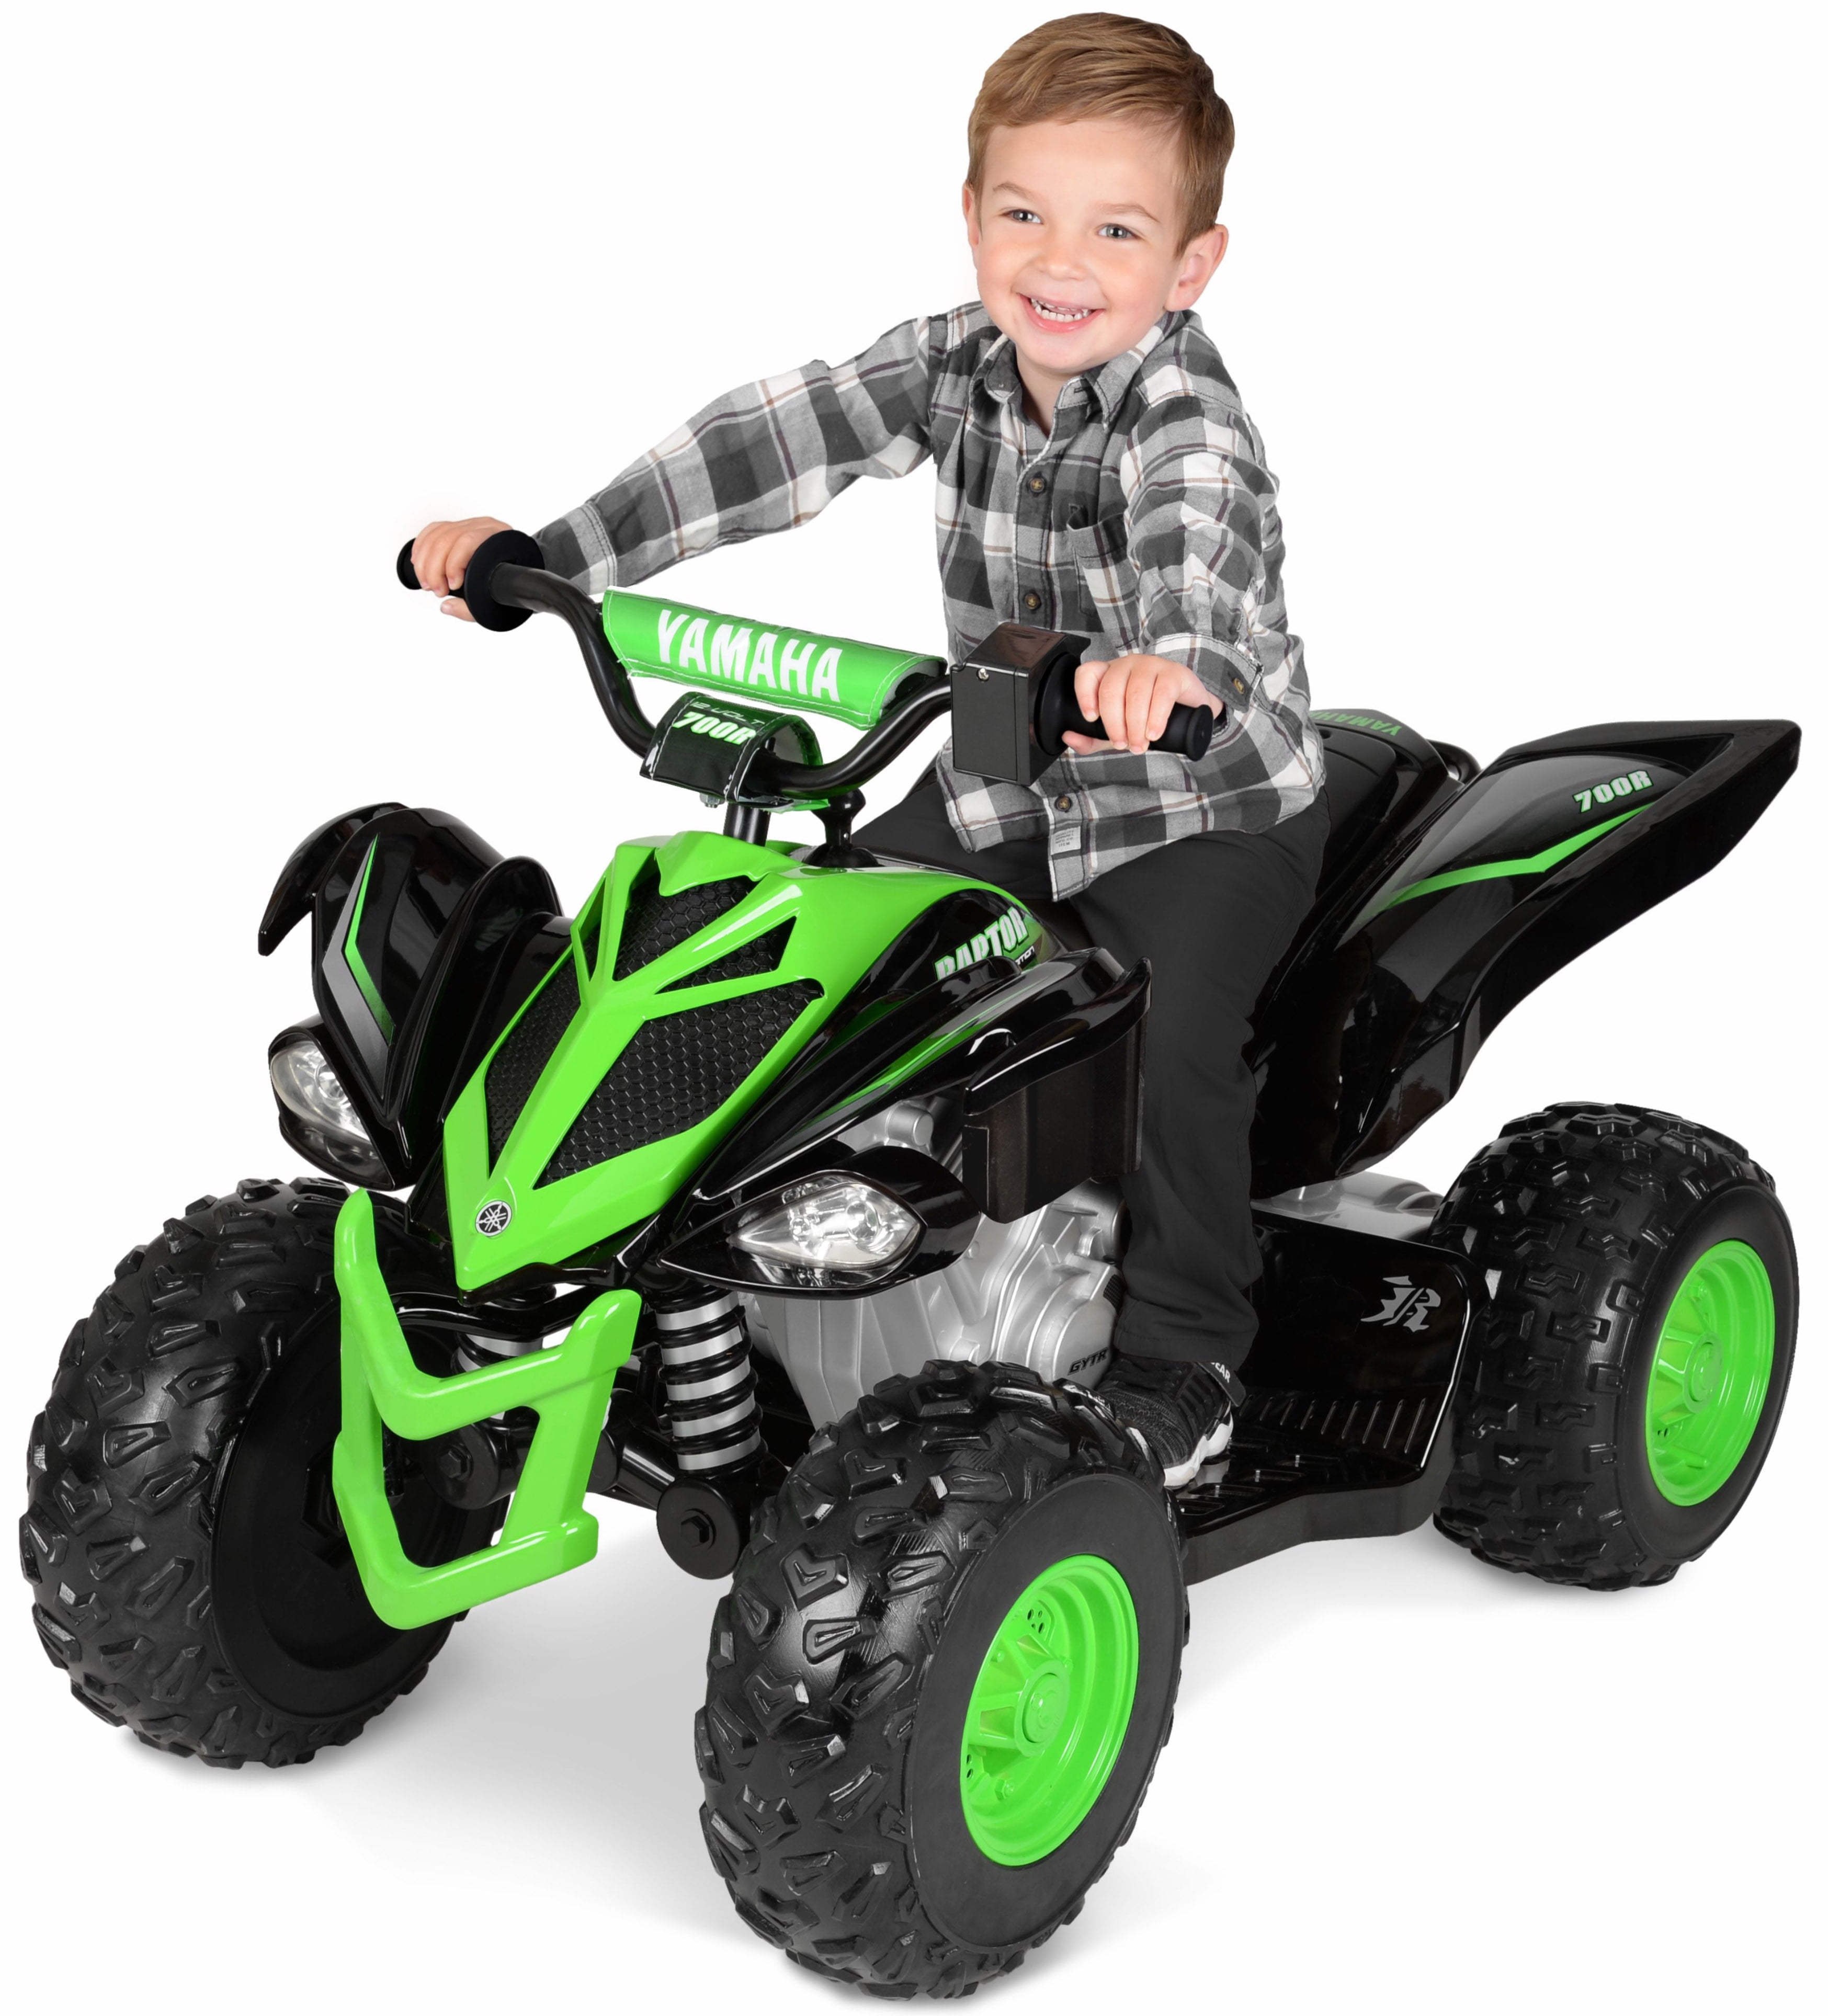 Yamaha Raptor ATV 12V Battery-Powered Ride-On Toy EC1708 for sale online 